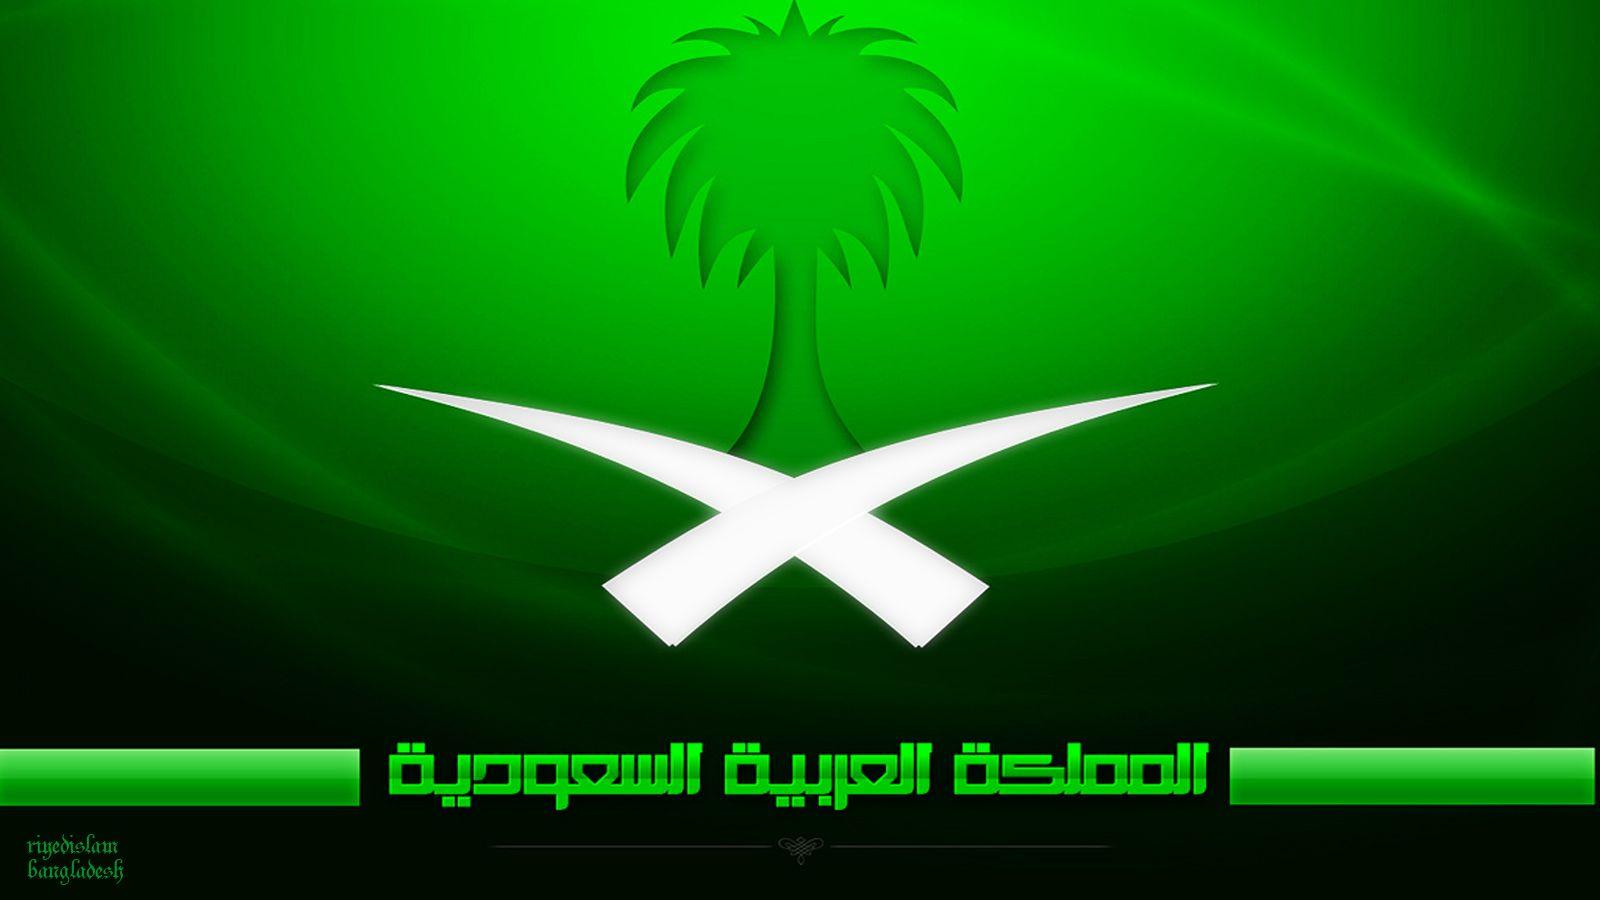 Saudi Arabia Flag Wallpaper (Picture)